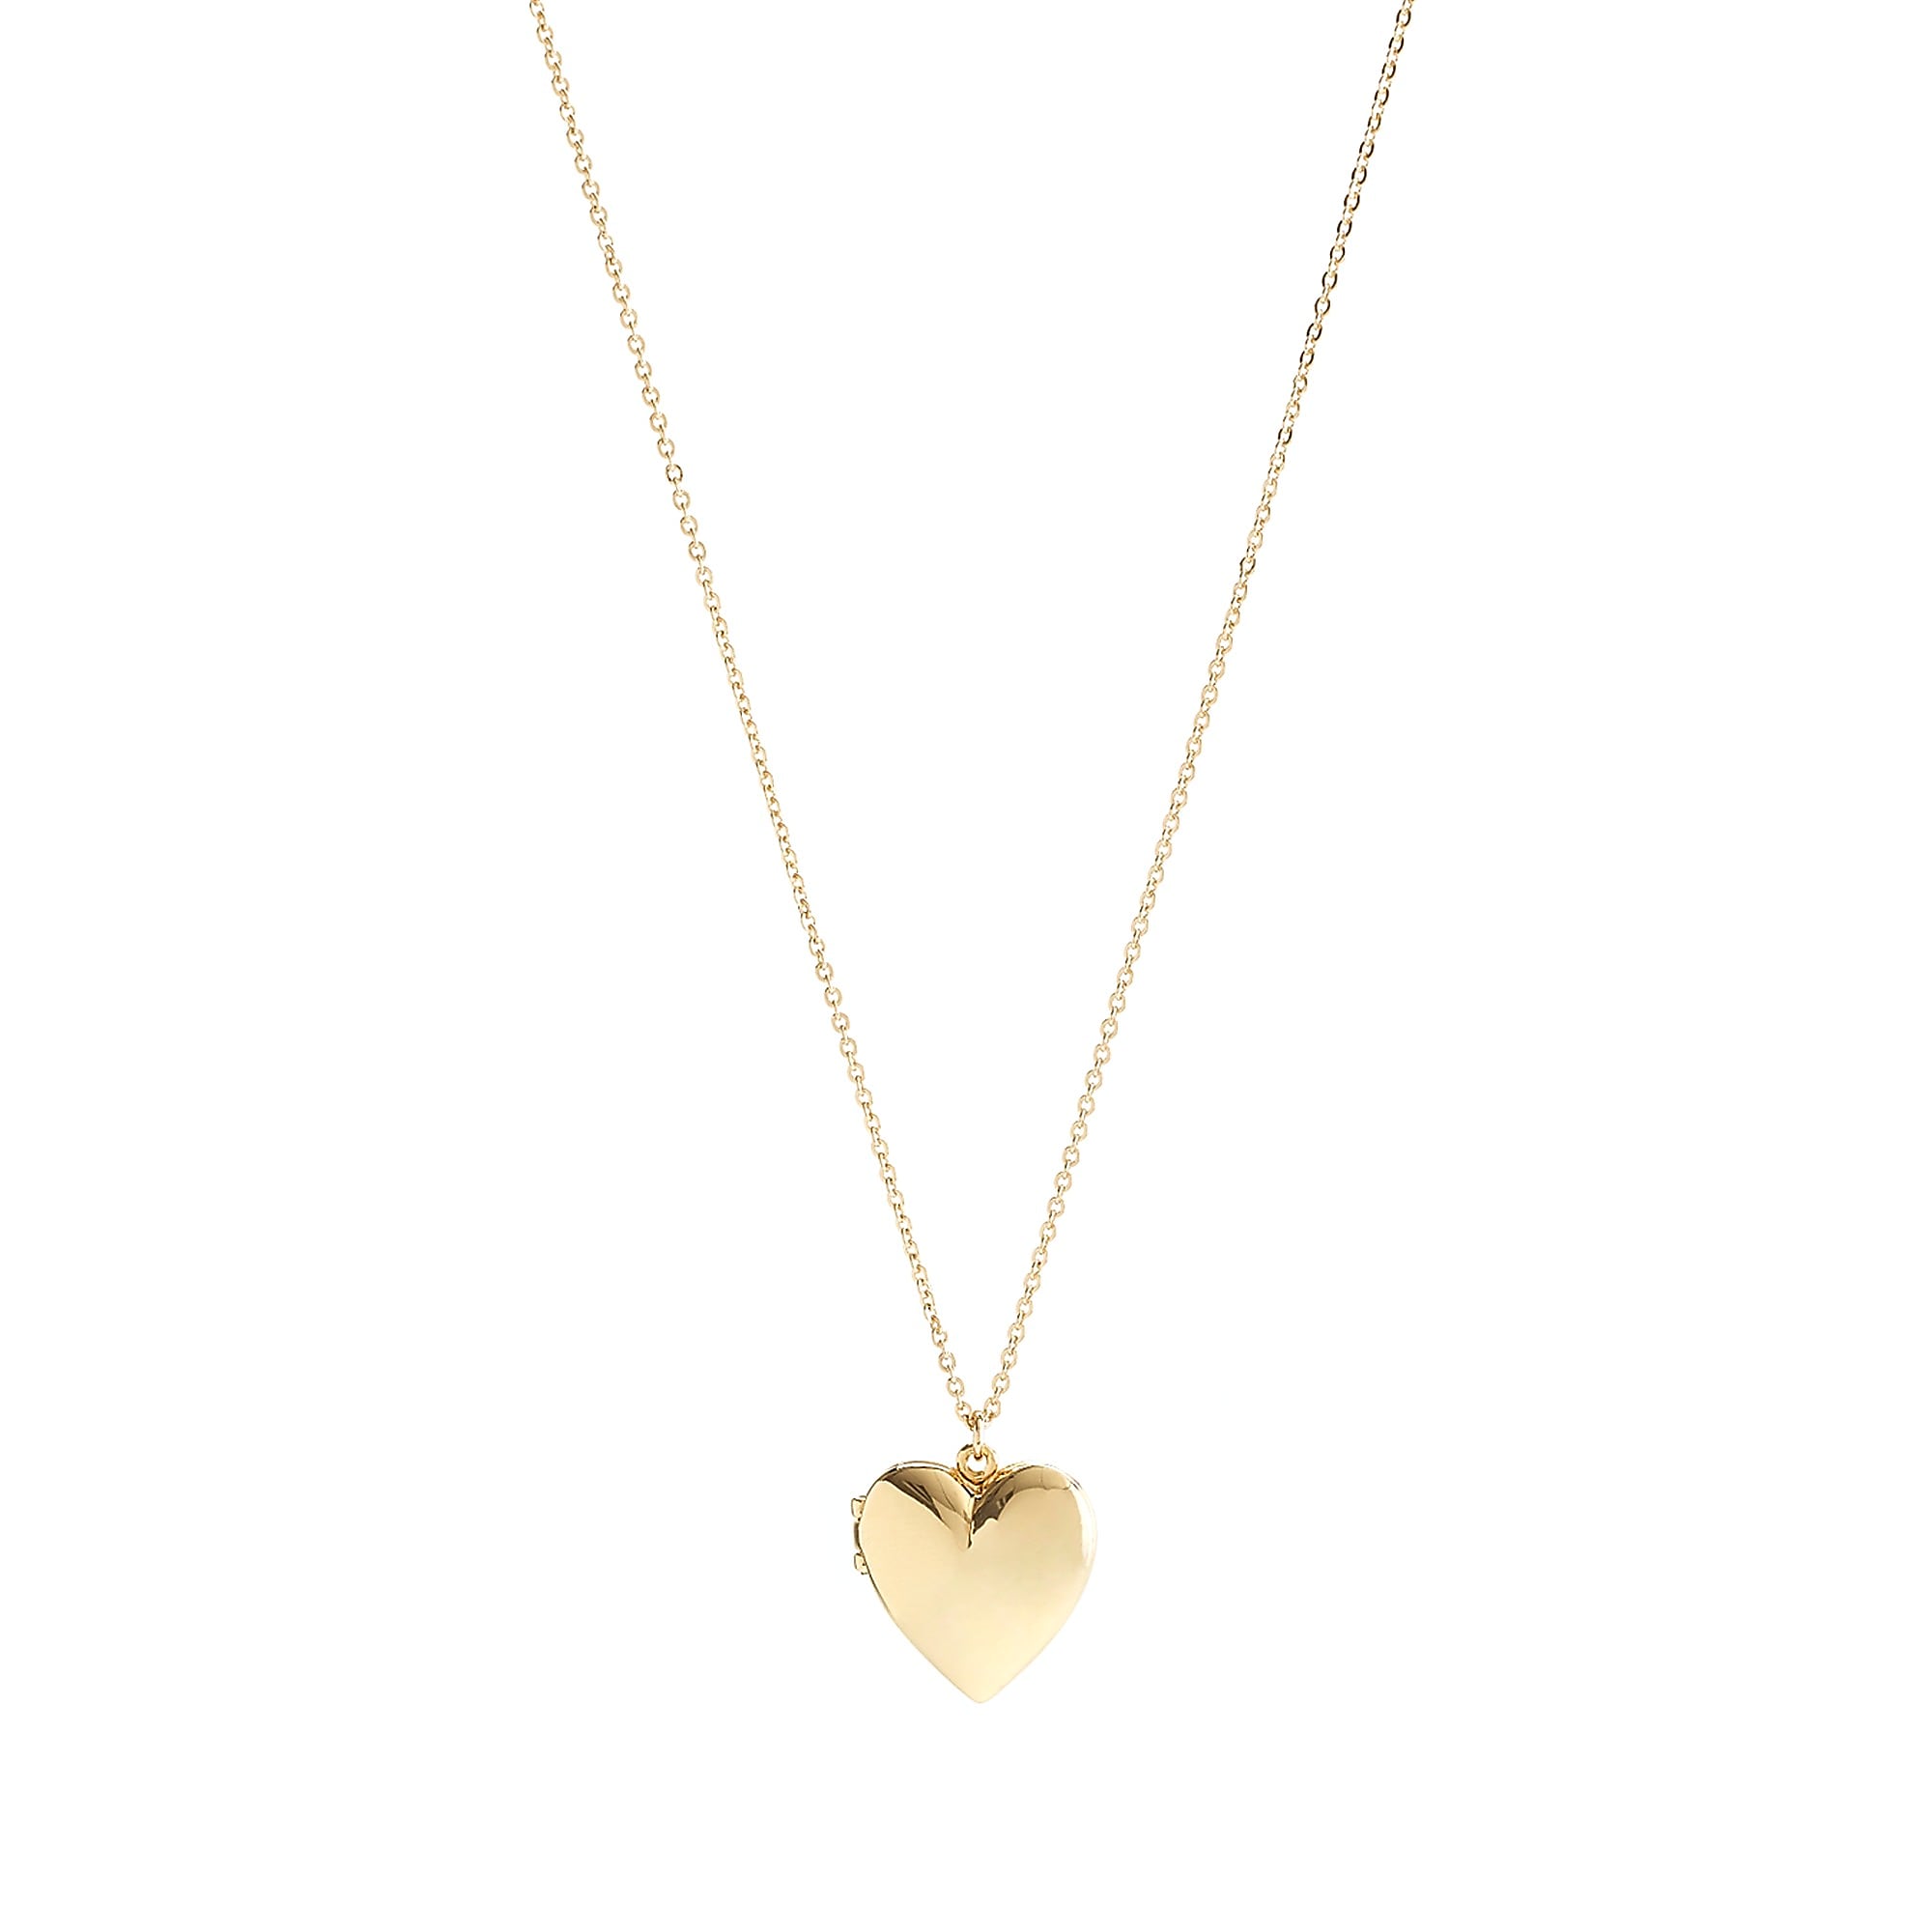 Girls' gold heart locket : Girl jewelry | J.Crew